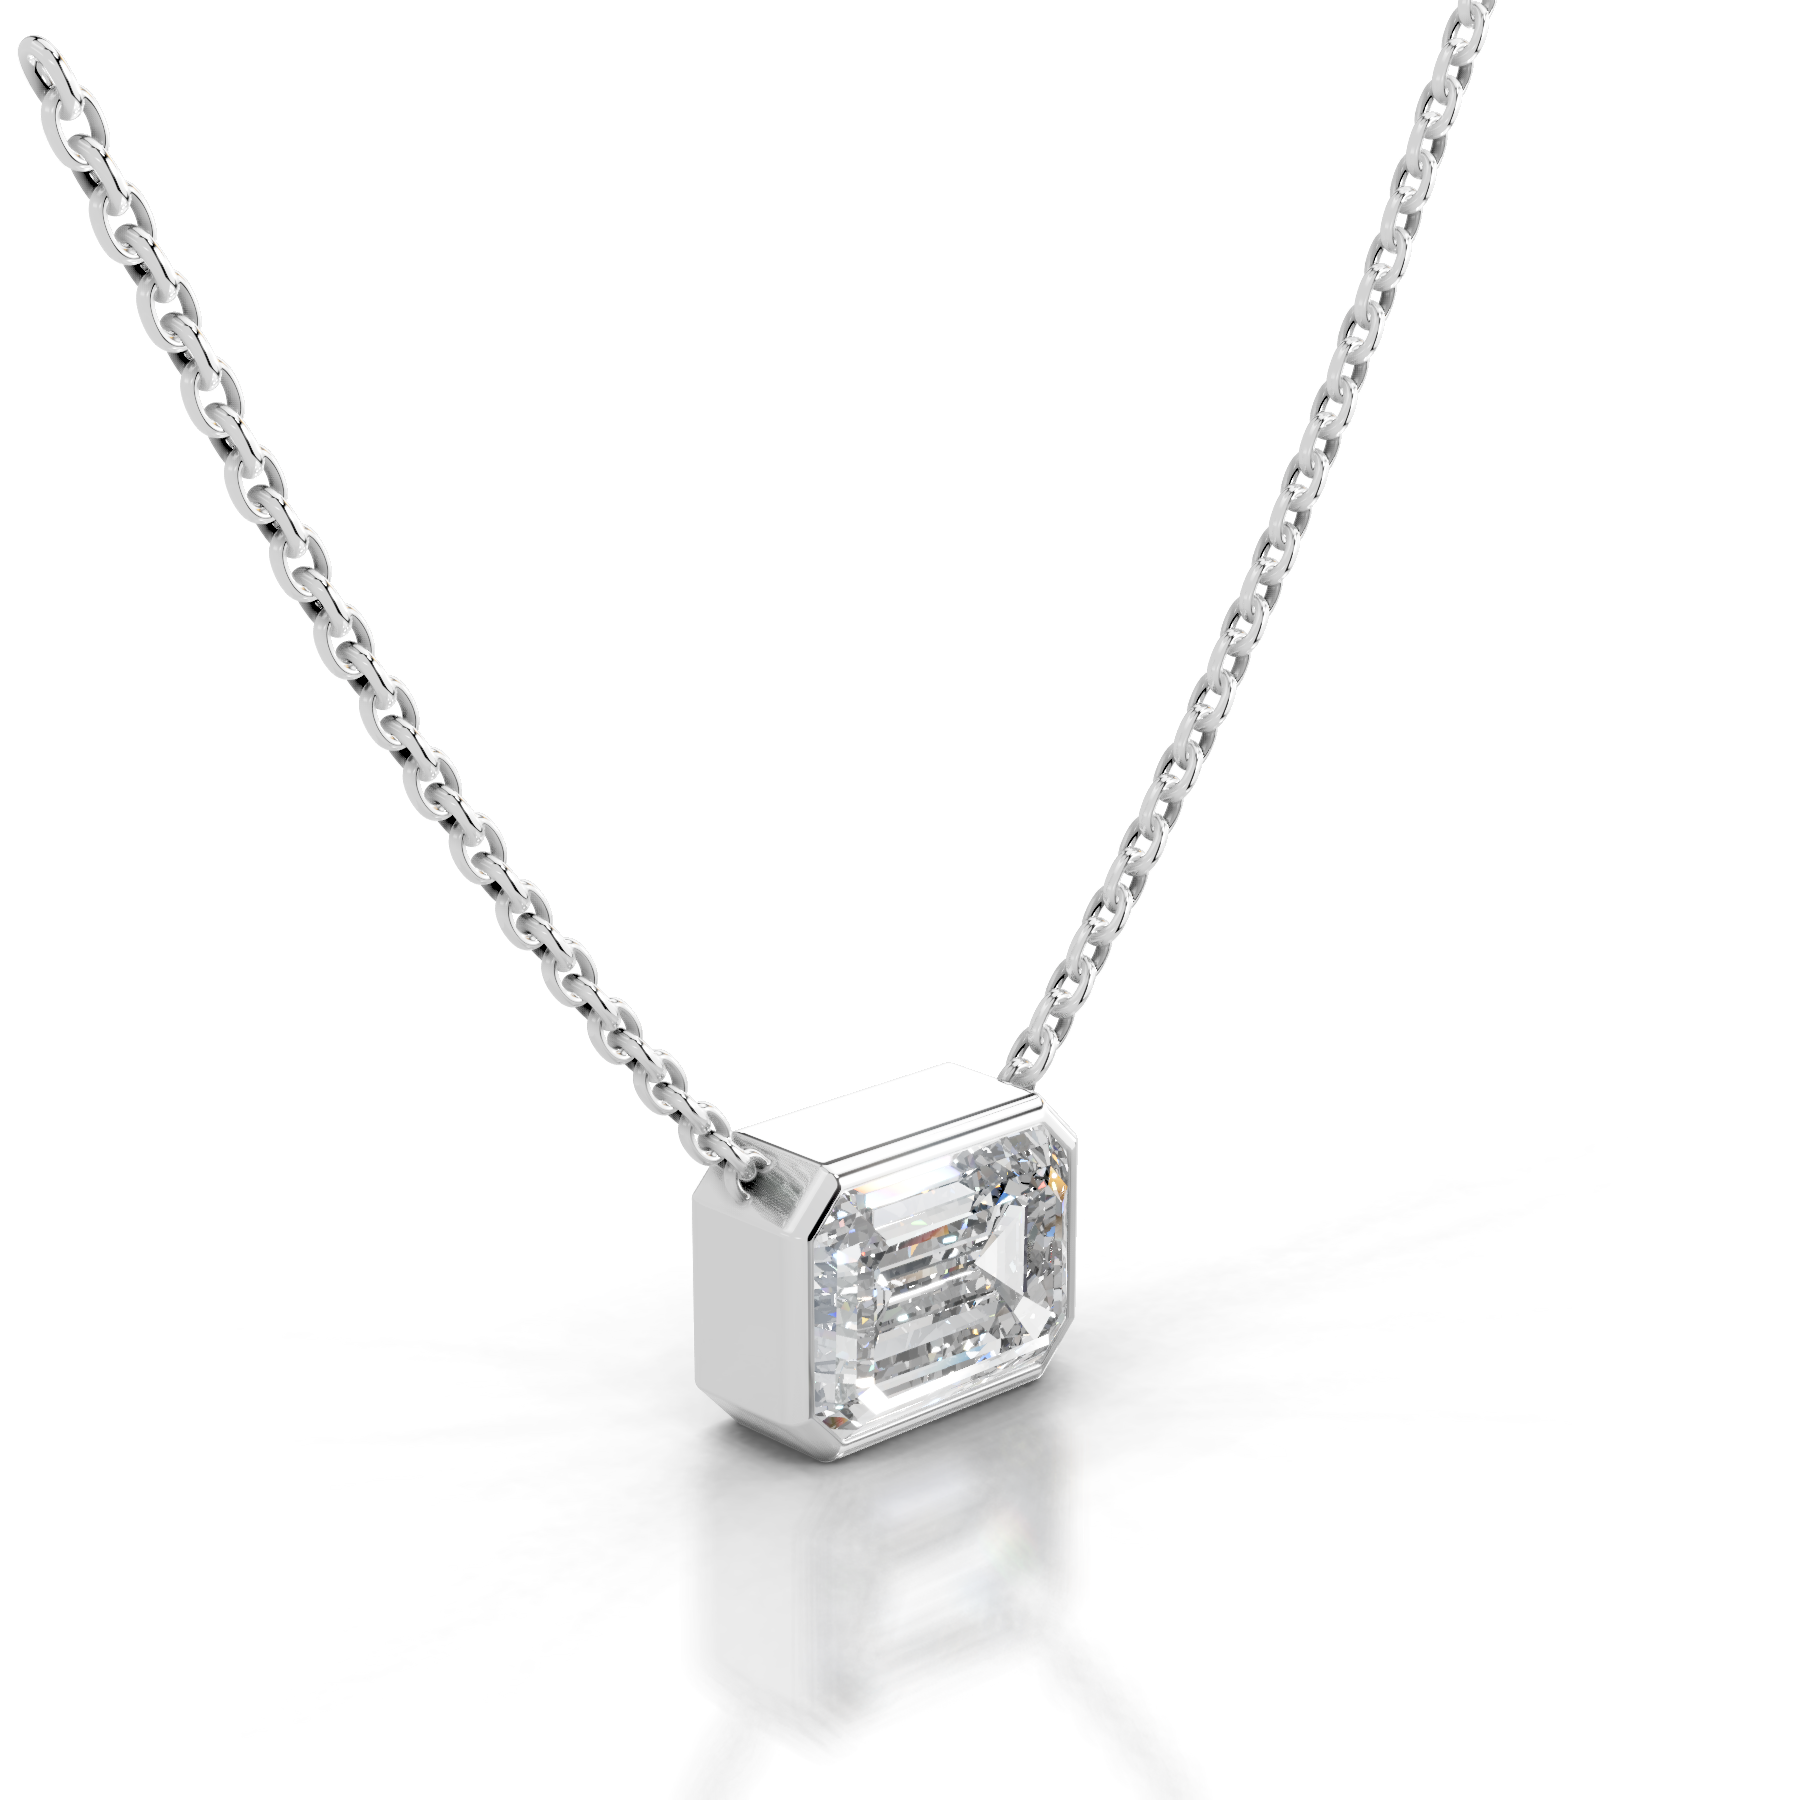 Etta Diamond Pendant  (2 Carat) -14K White Gold